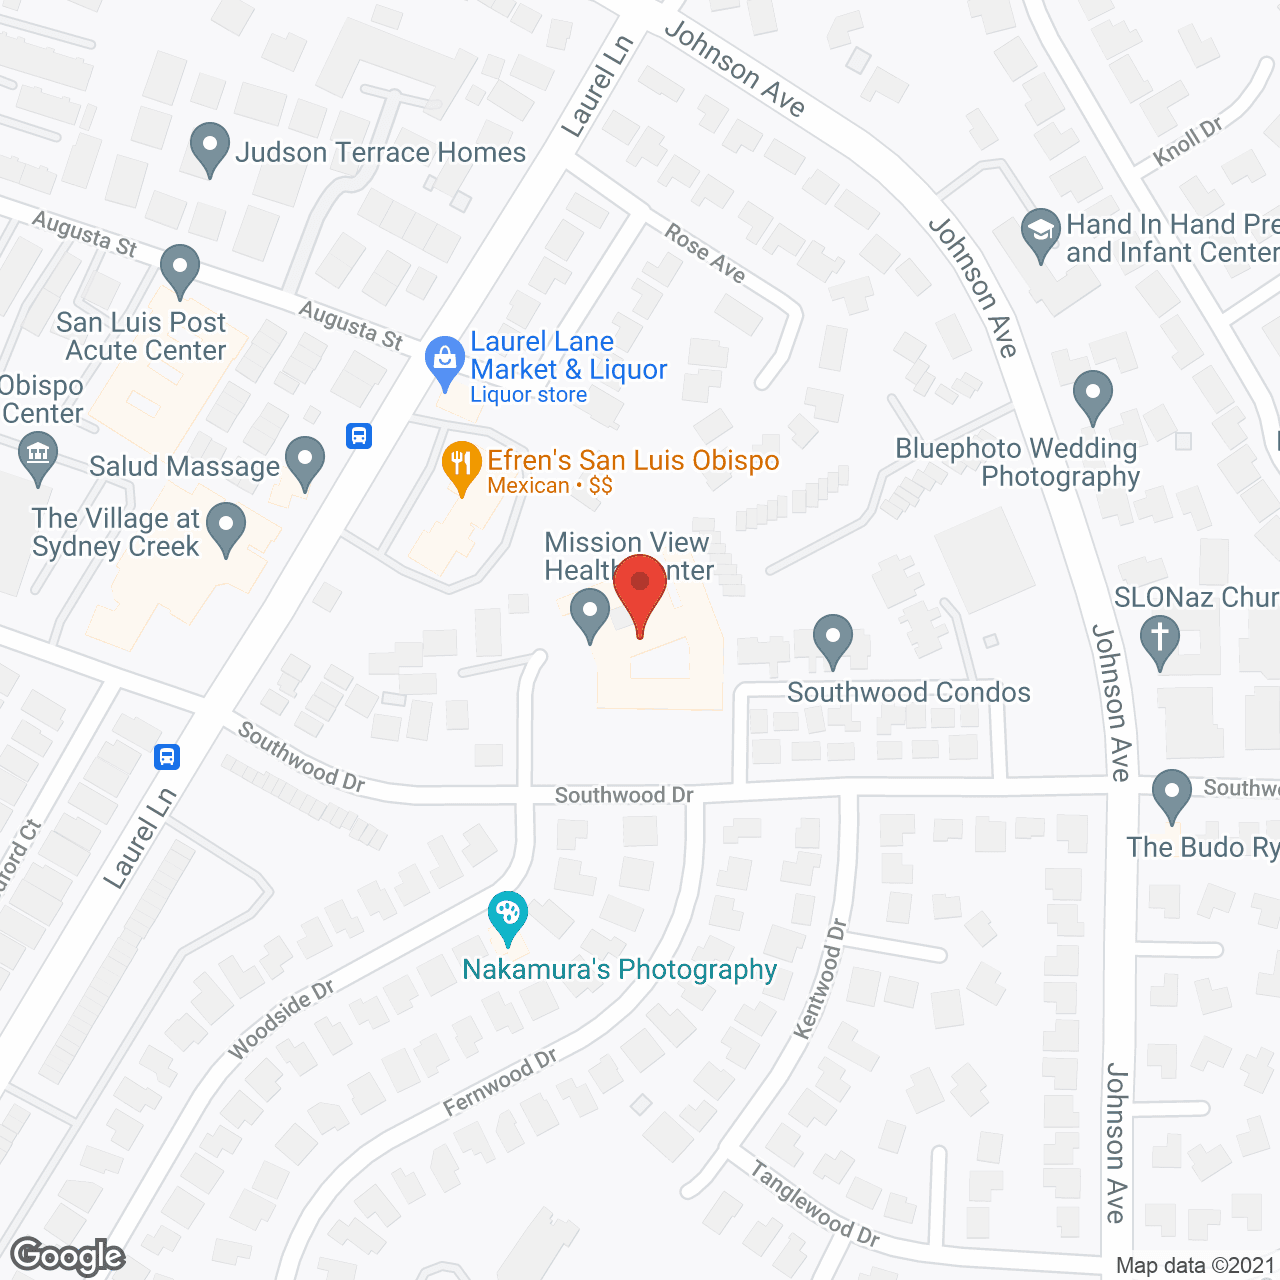 Woodside Nursing Center in google map